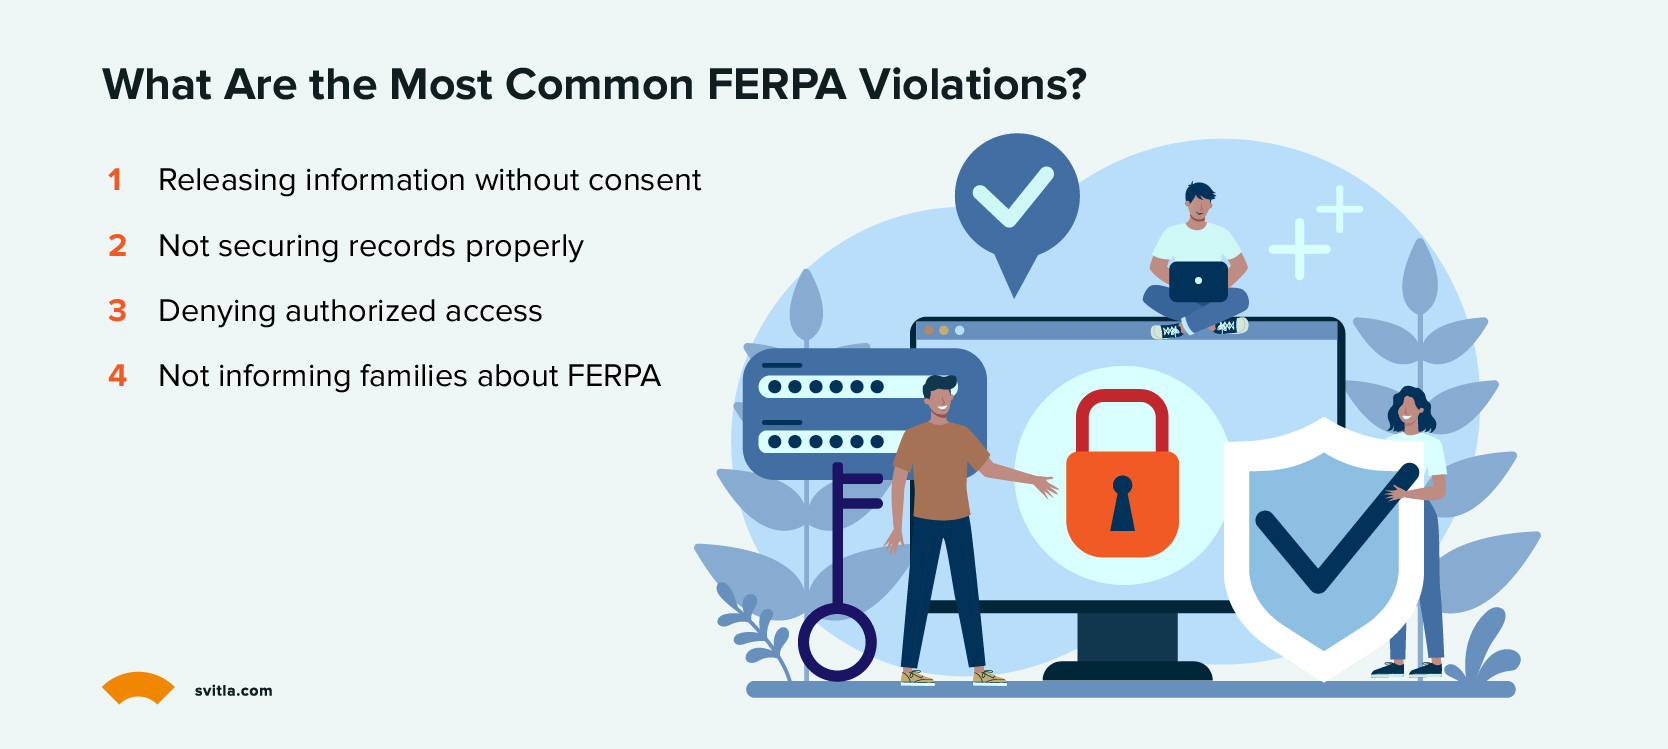 FERPA violations